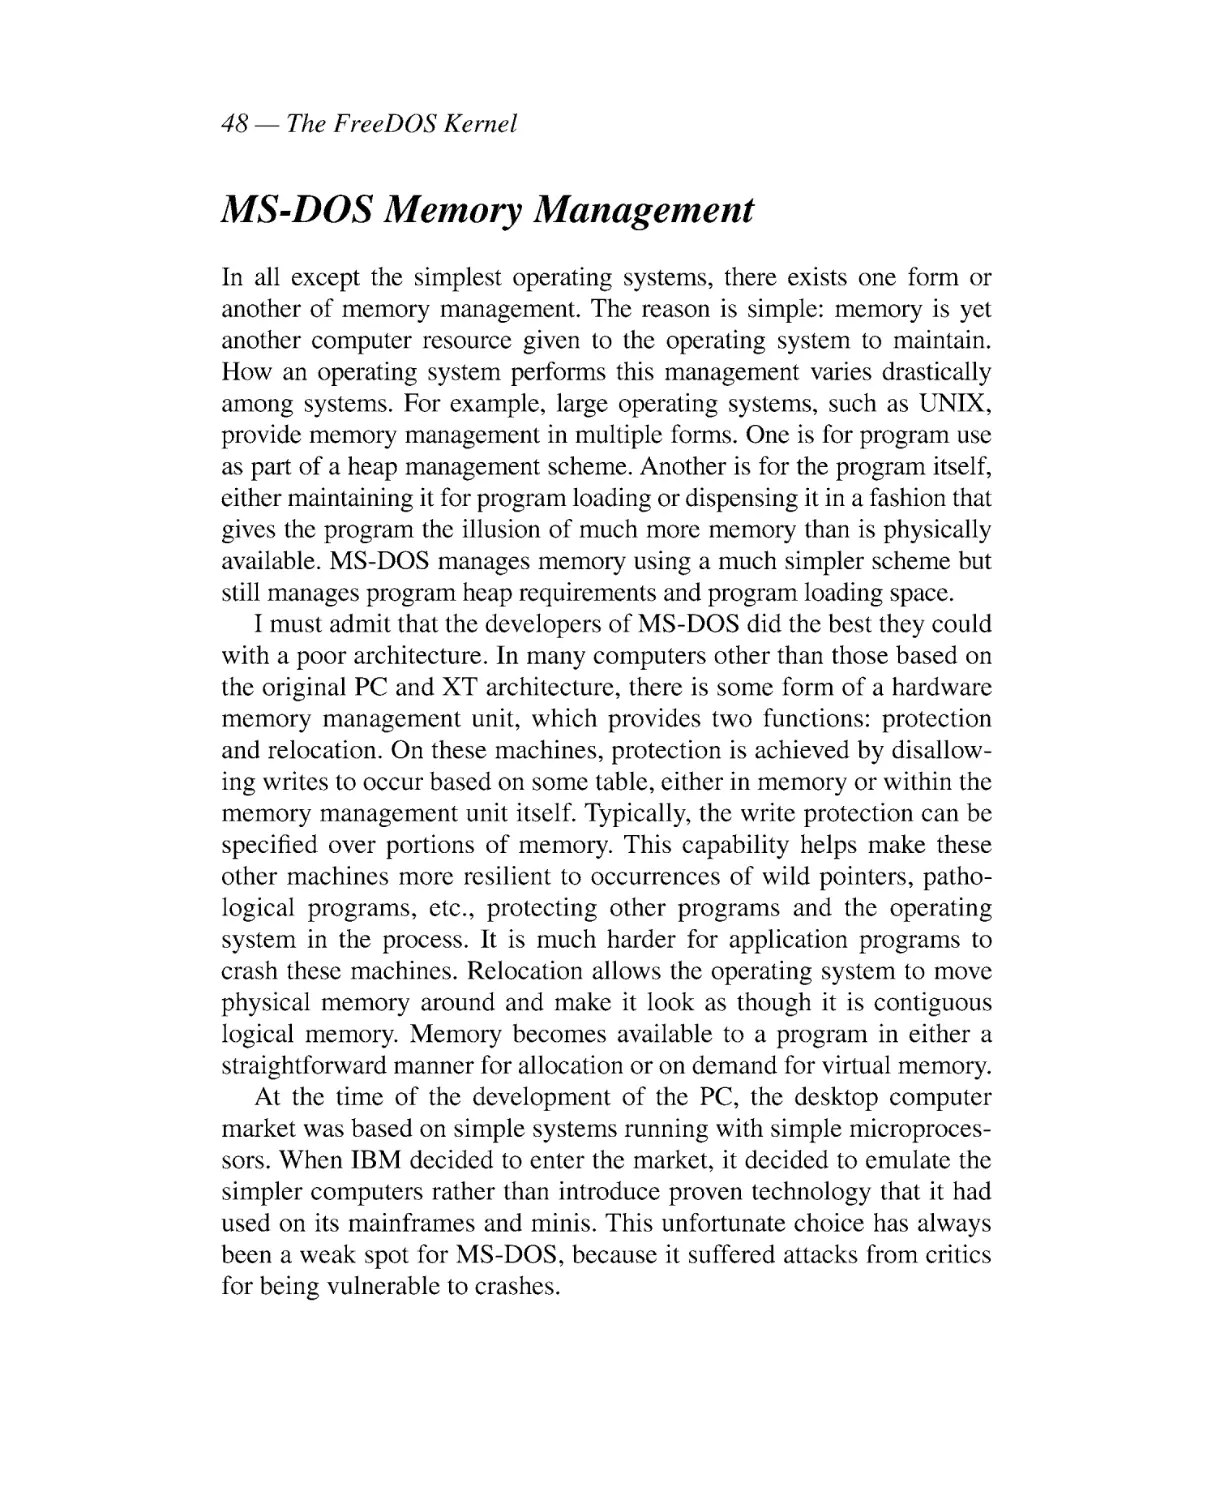 MS-DOS Memory Management